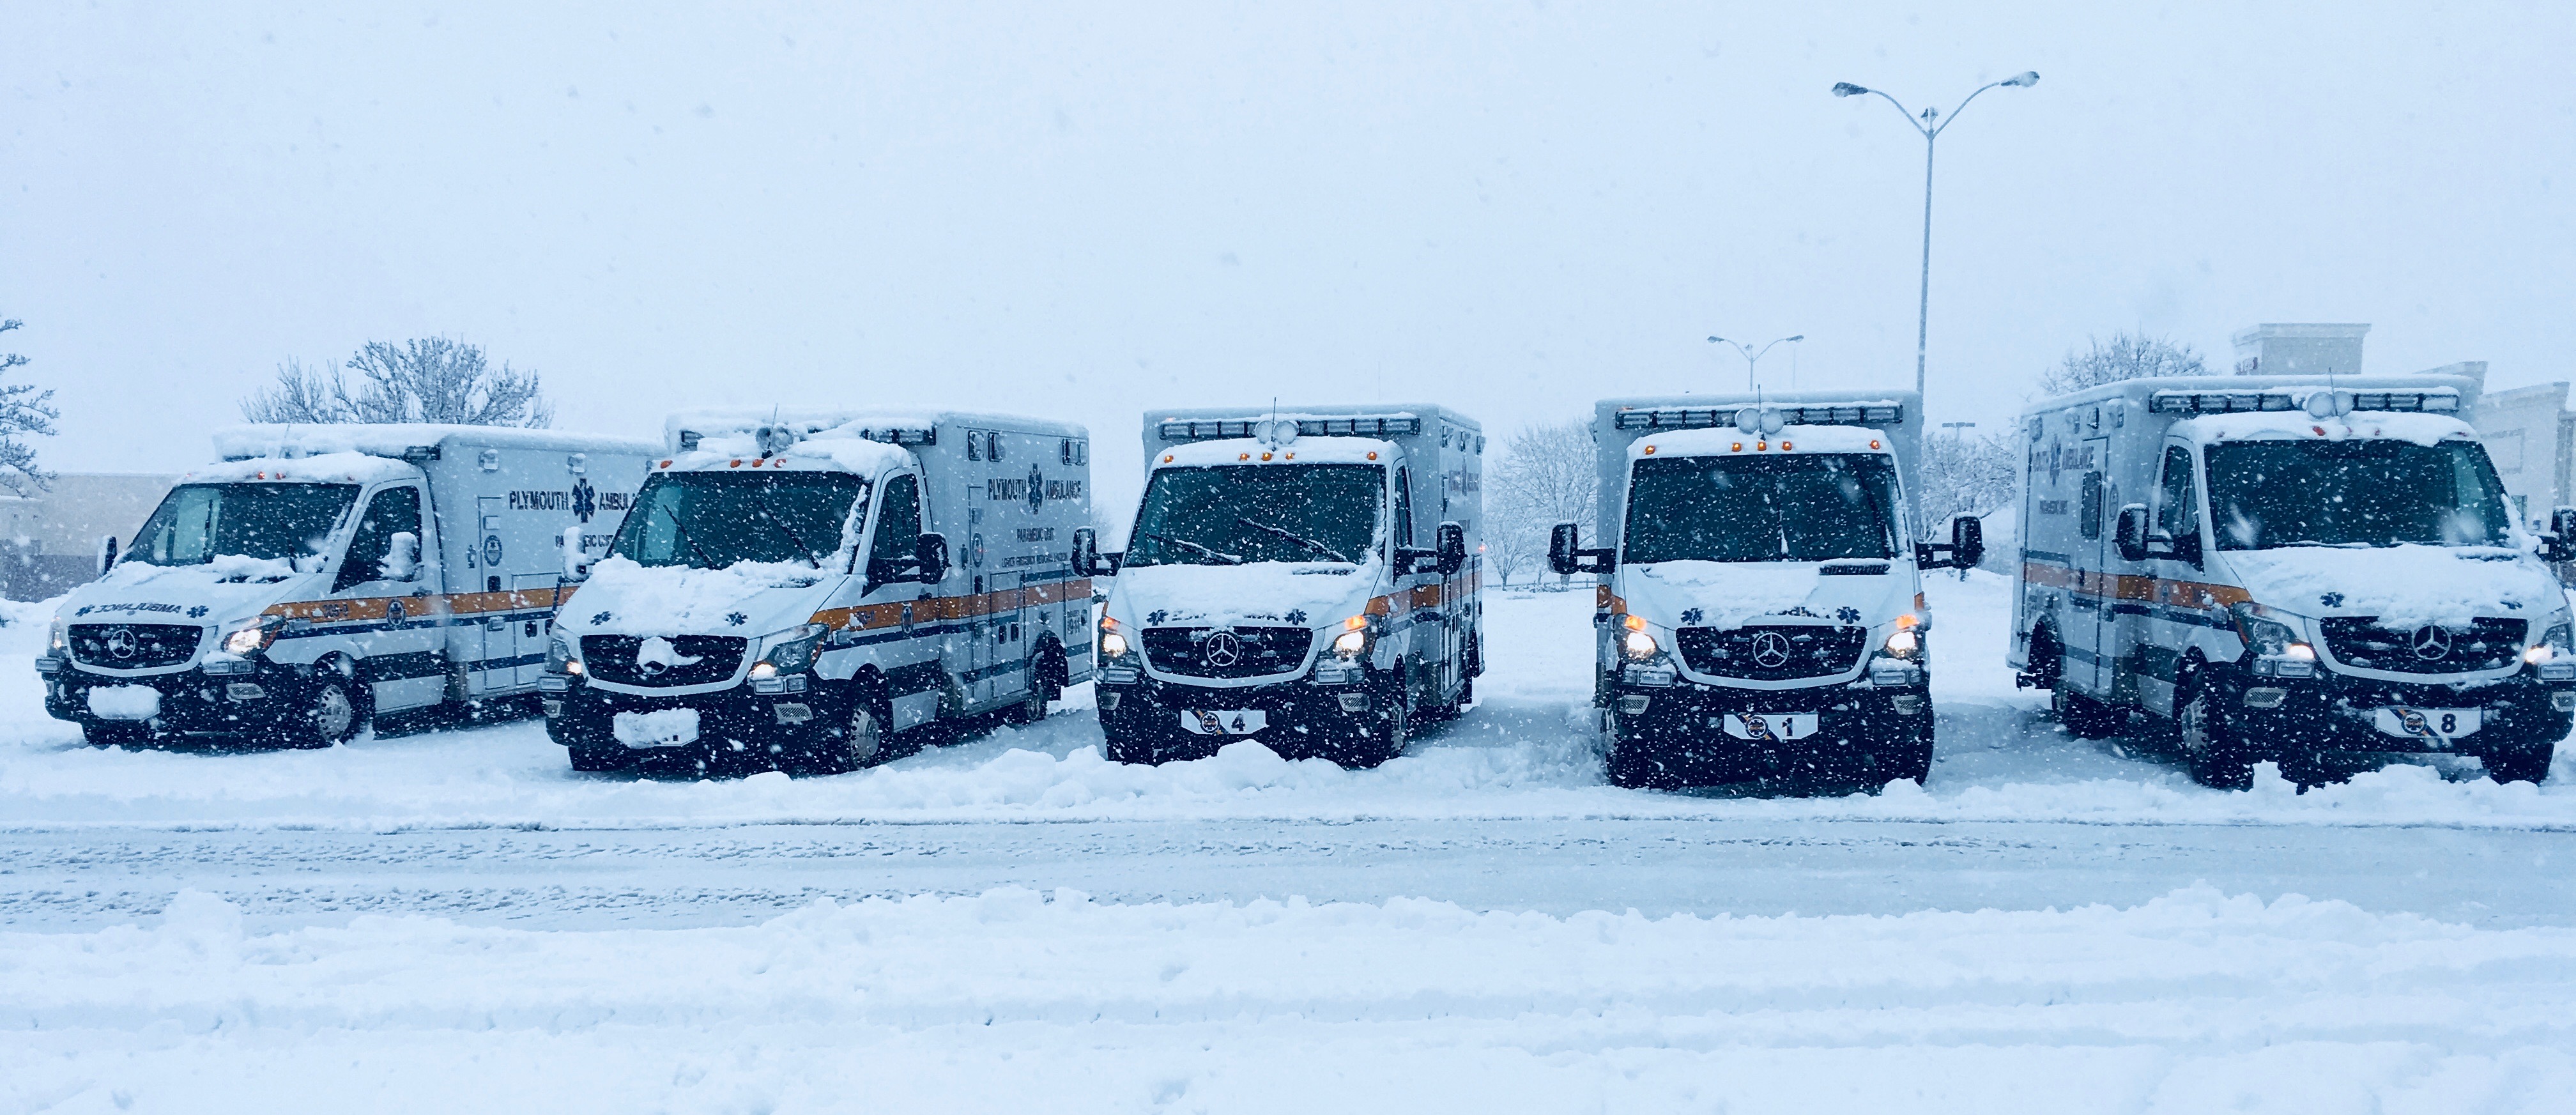 308 Ambulances during Winter Storm Quinn